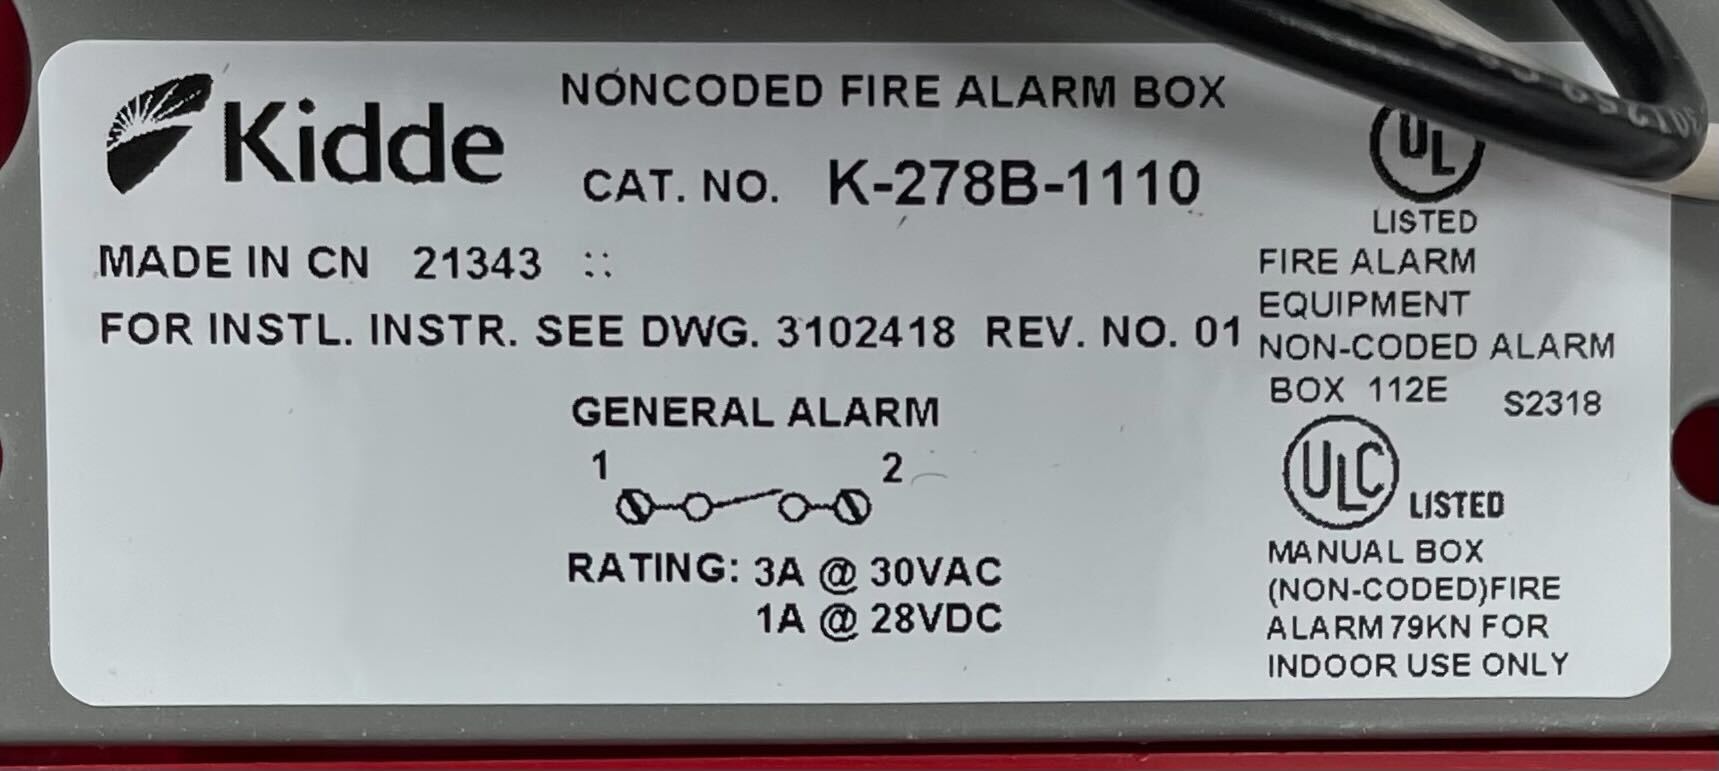 Edwards K-278B-1110 - The Fire Alarm Supplier